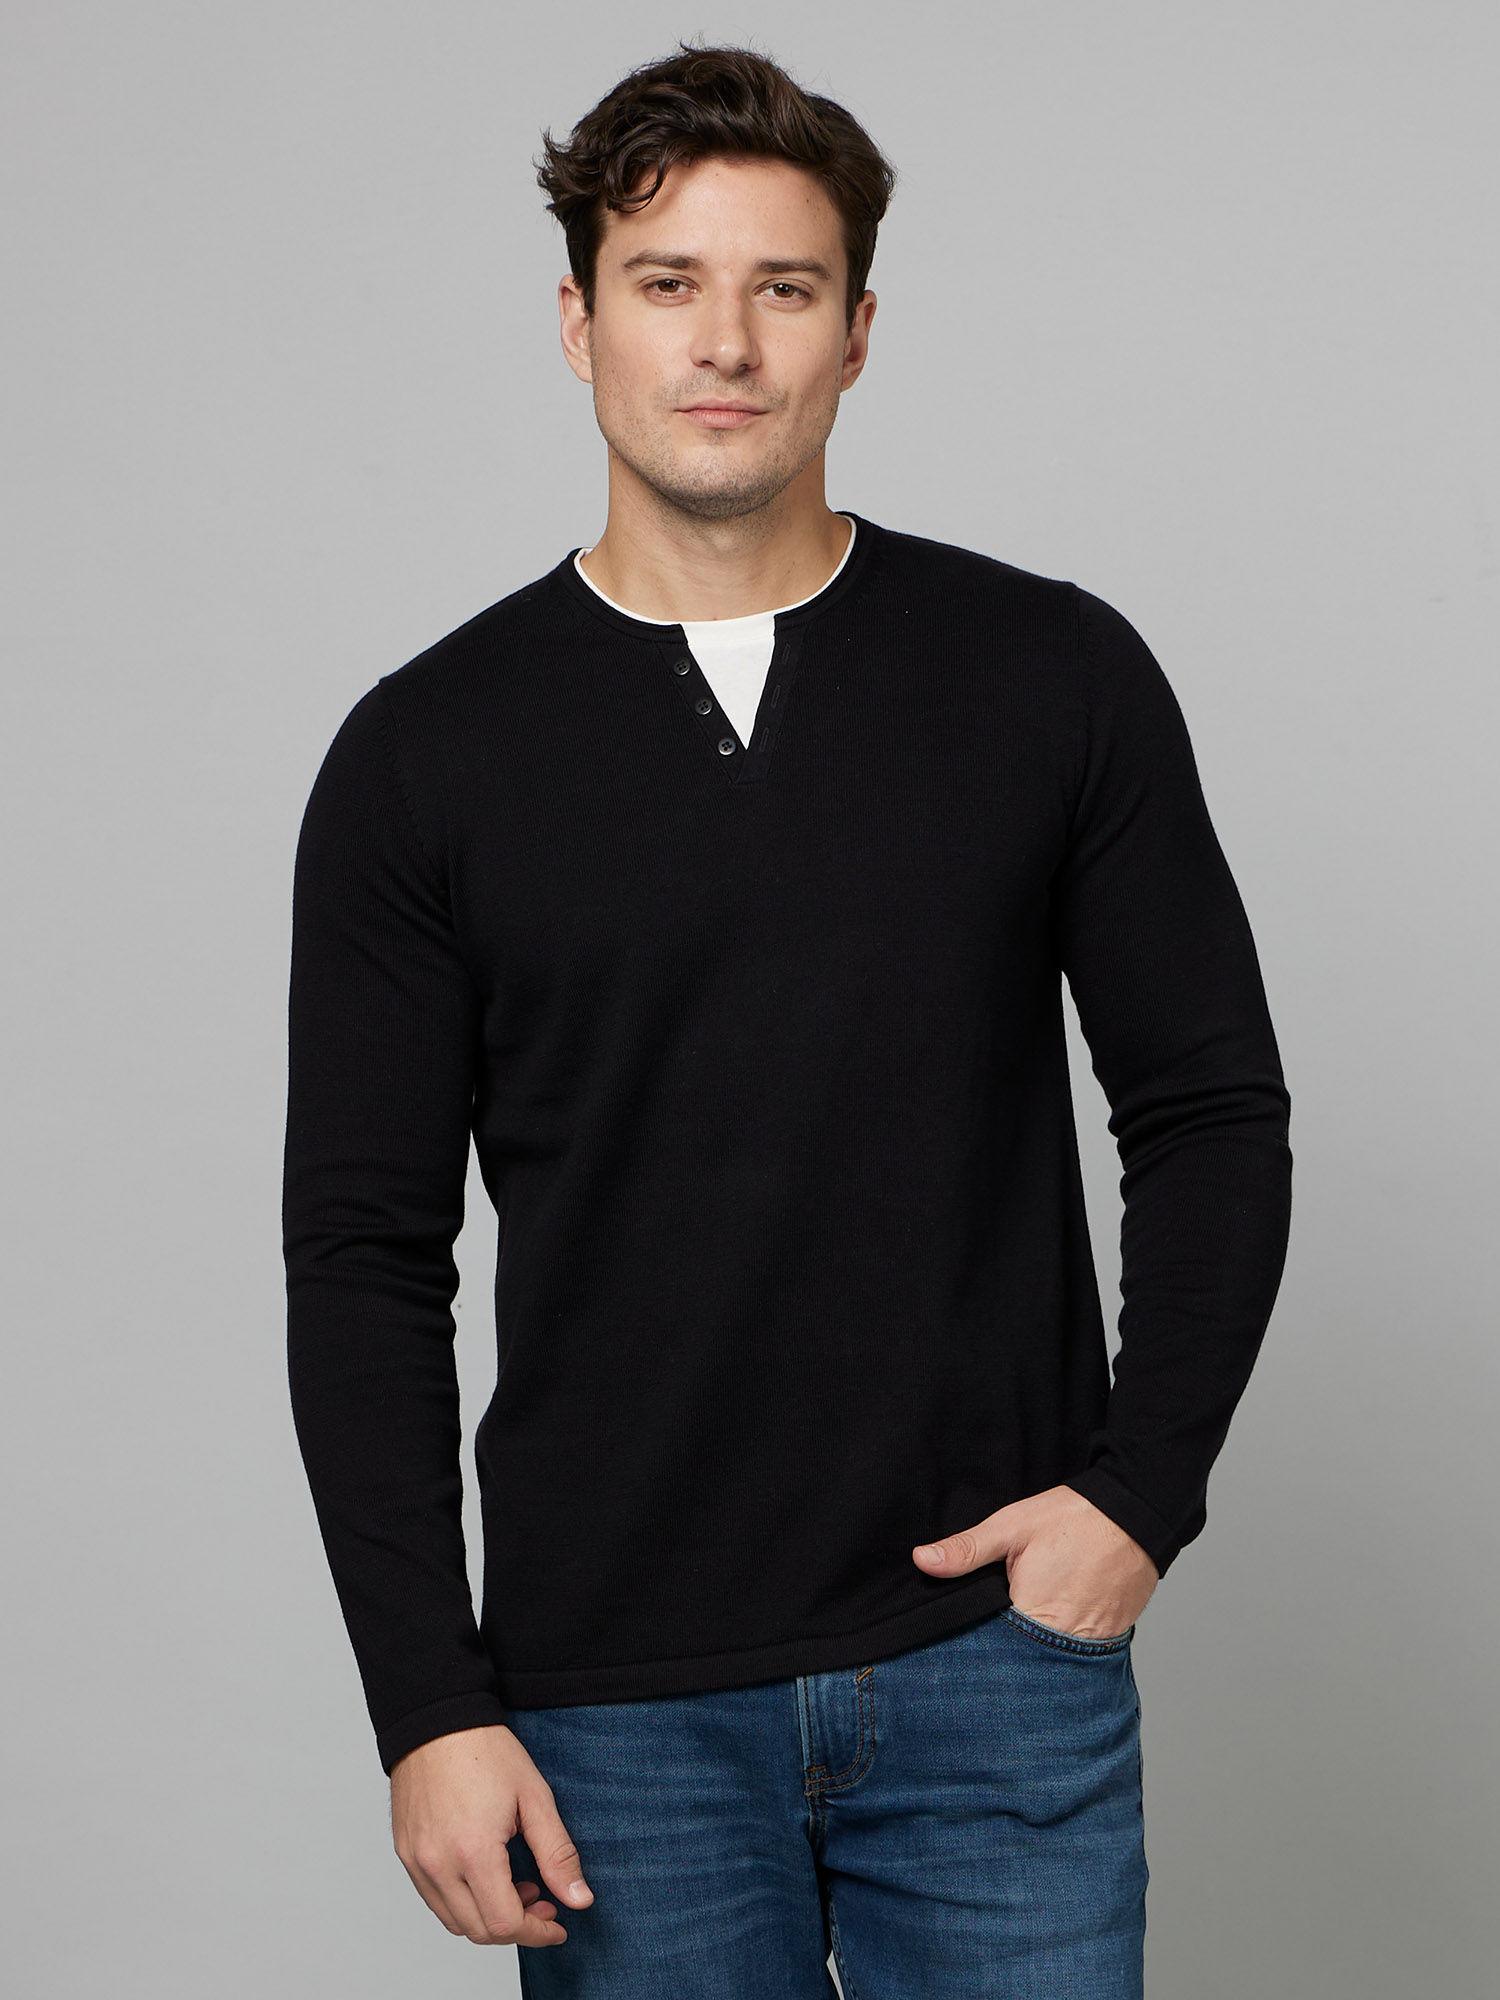 basic solid black long sleeves mandarin neck sweater